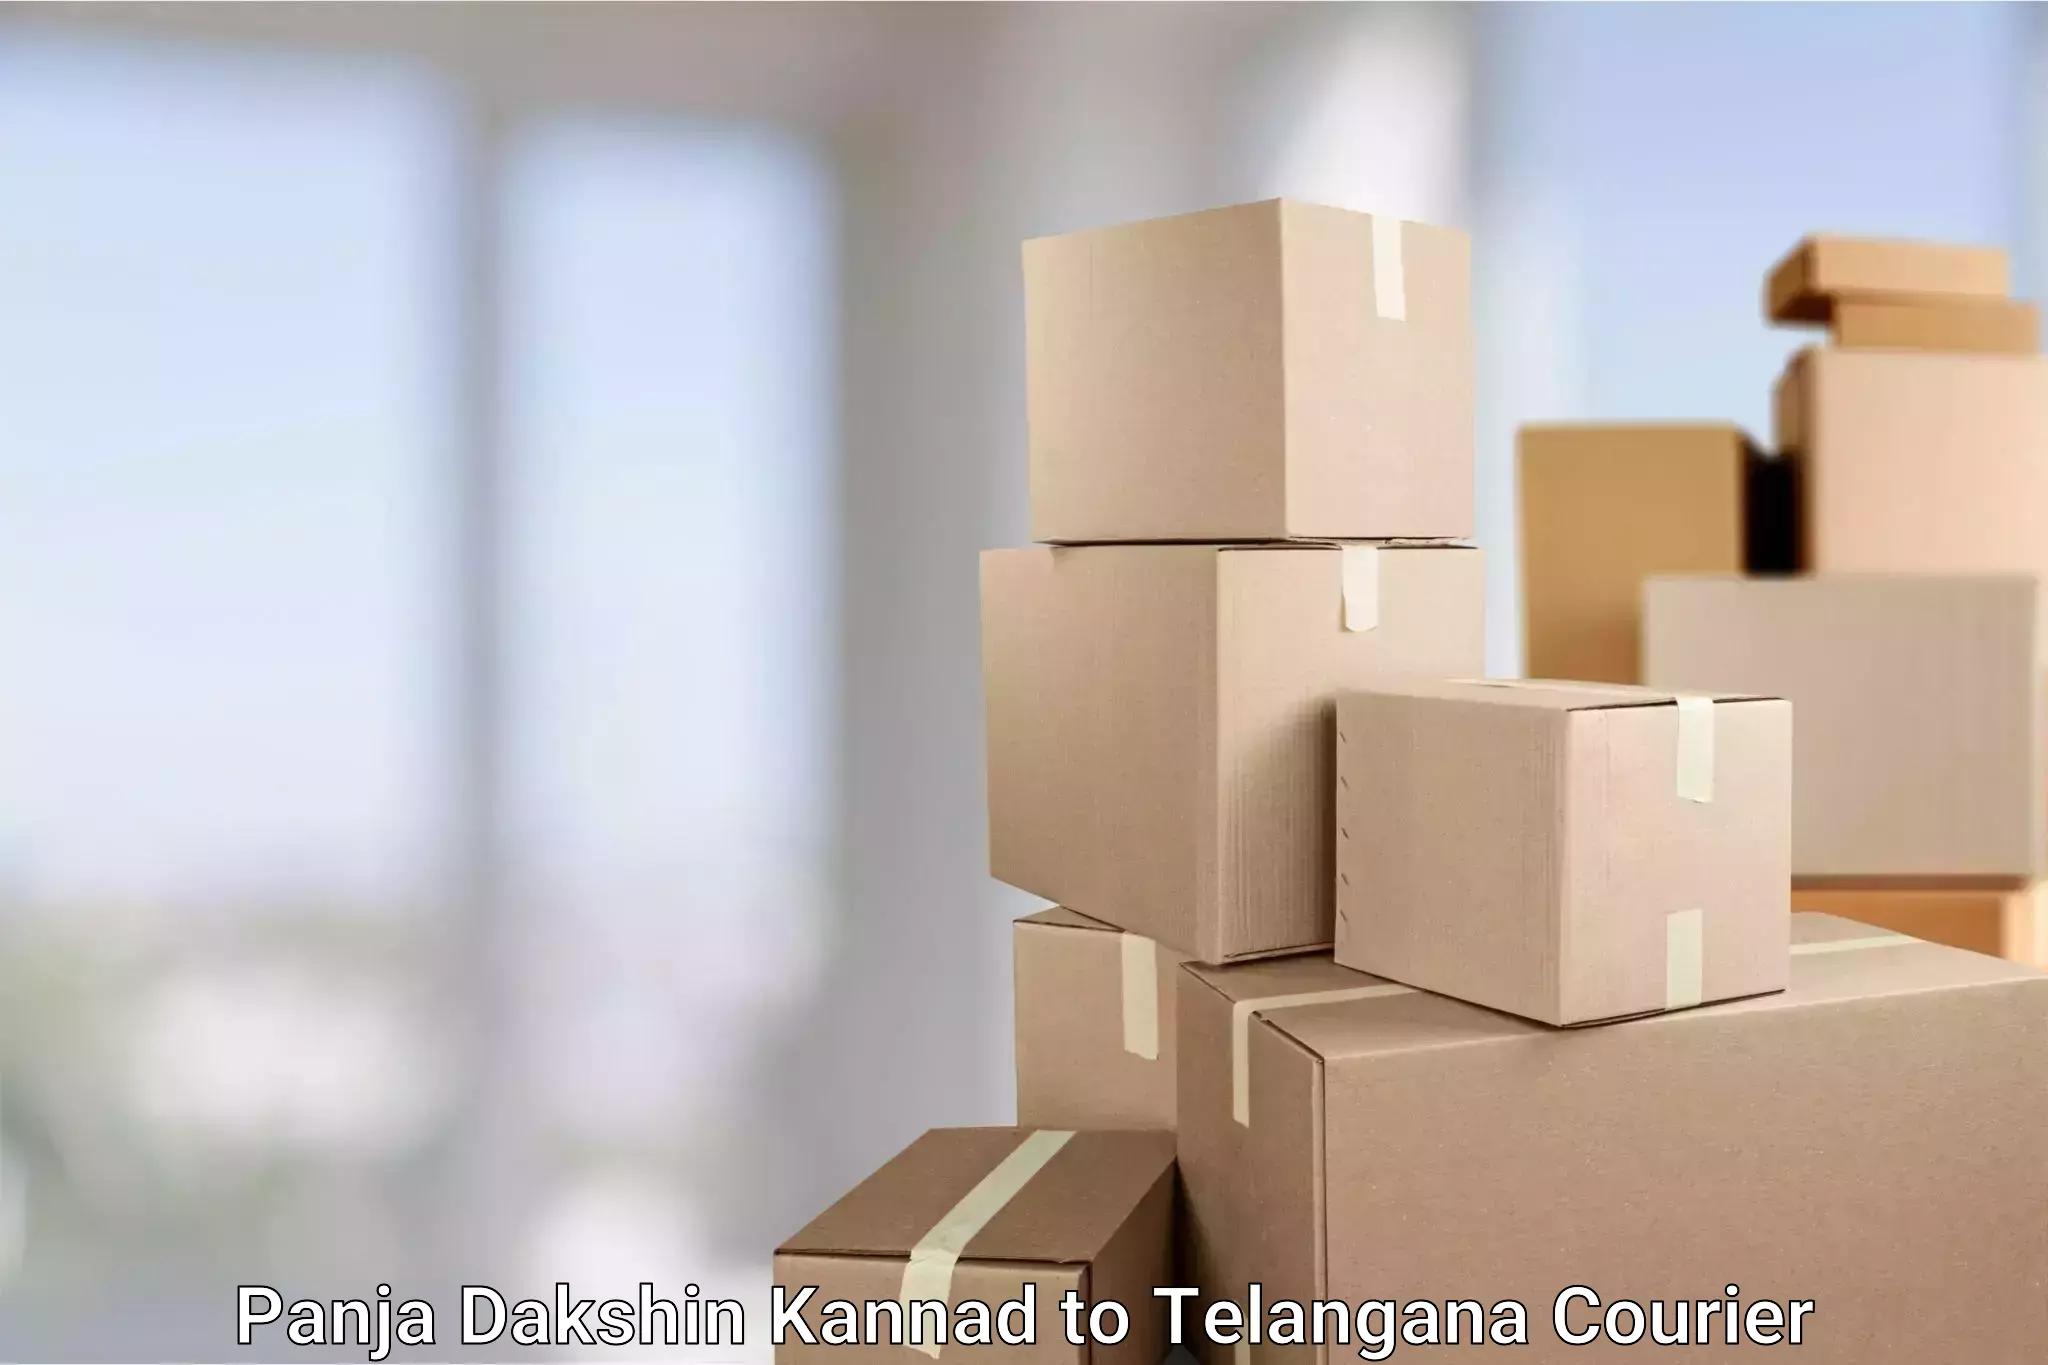 Multi-national courier services Panja Dakshin Kannad to Bhupalpally